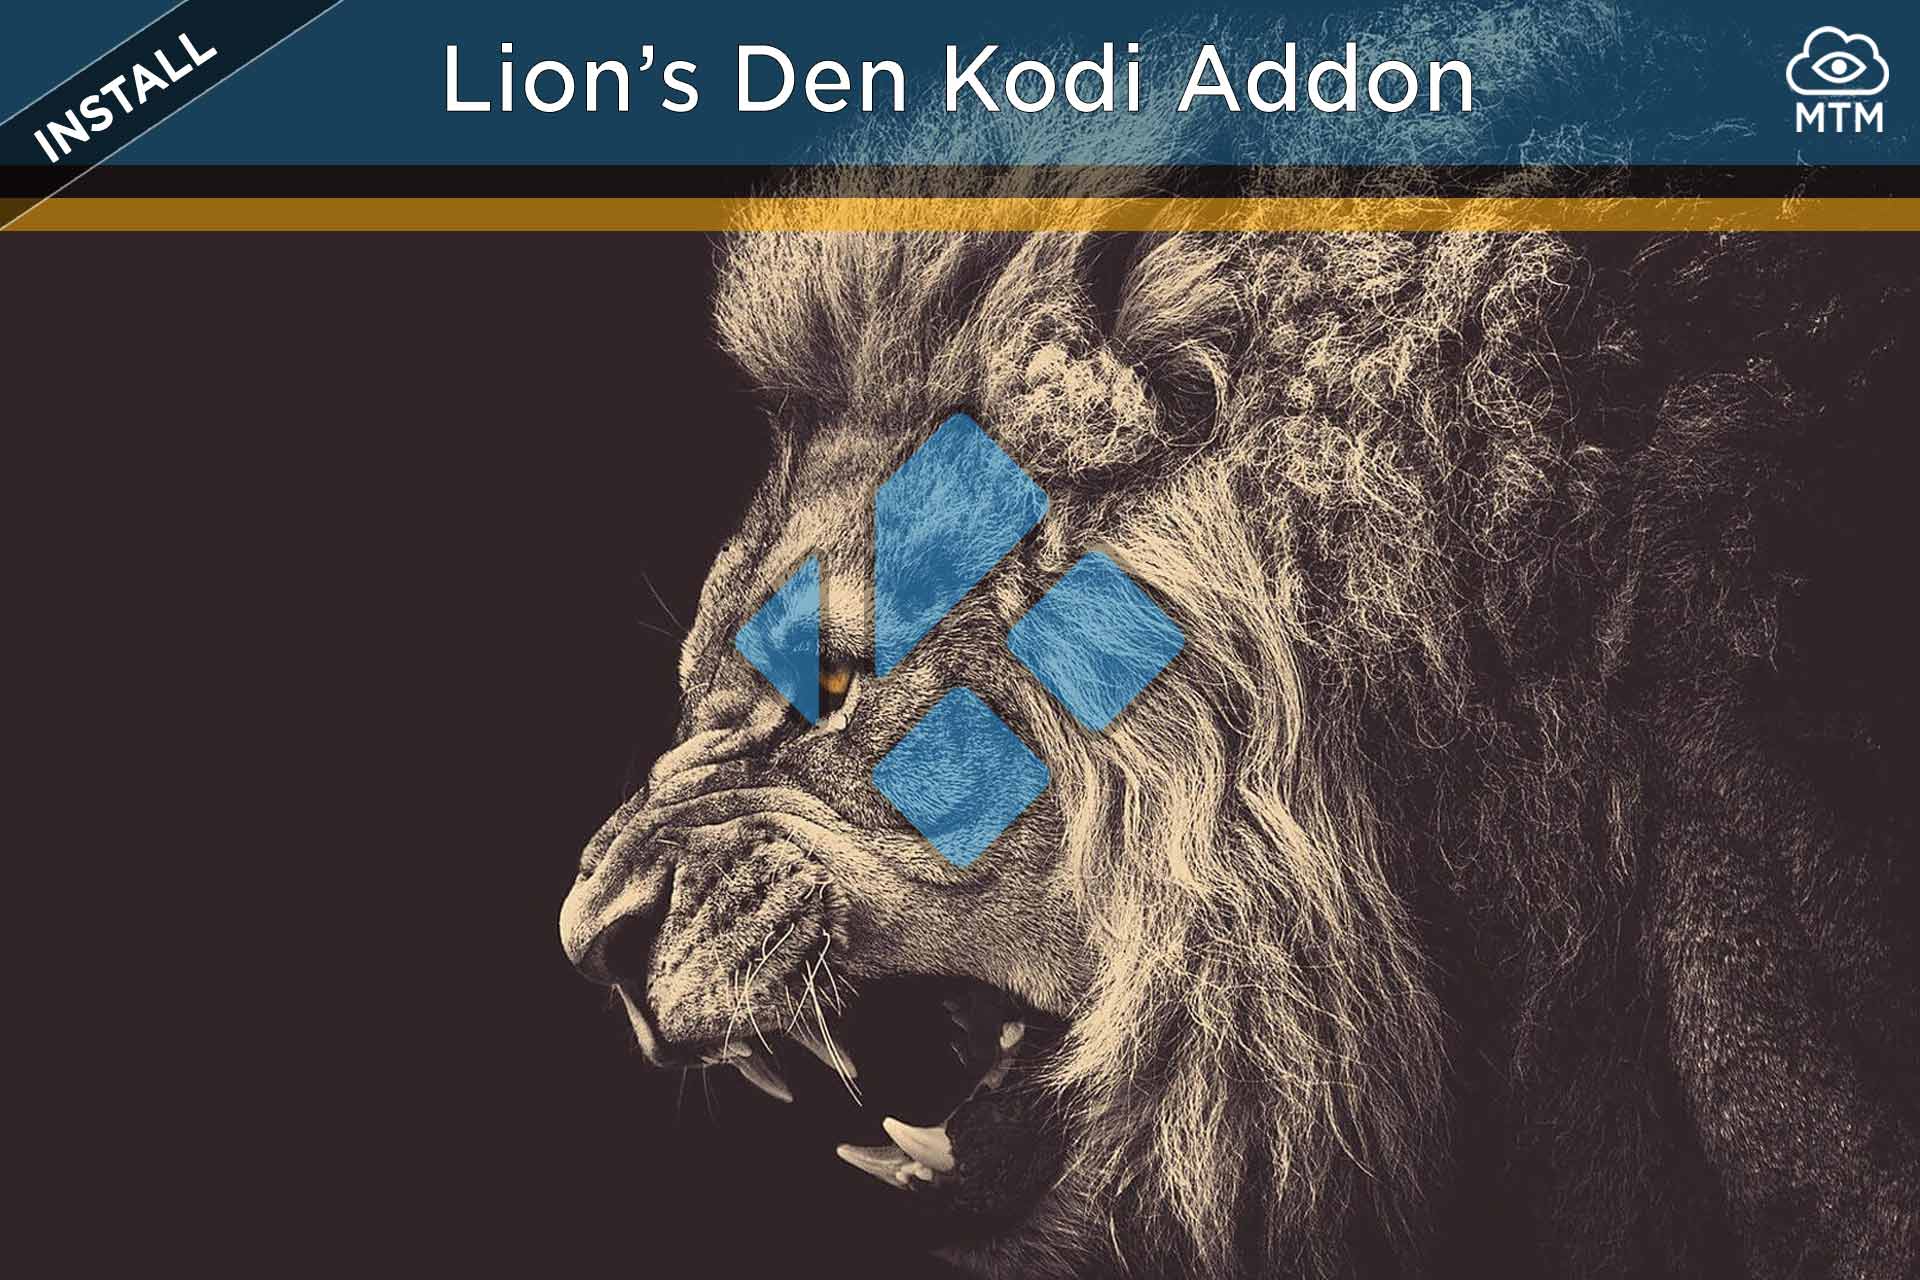 Lions Den Kodi Addon instalatu